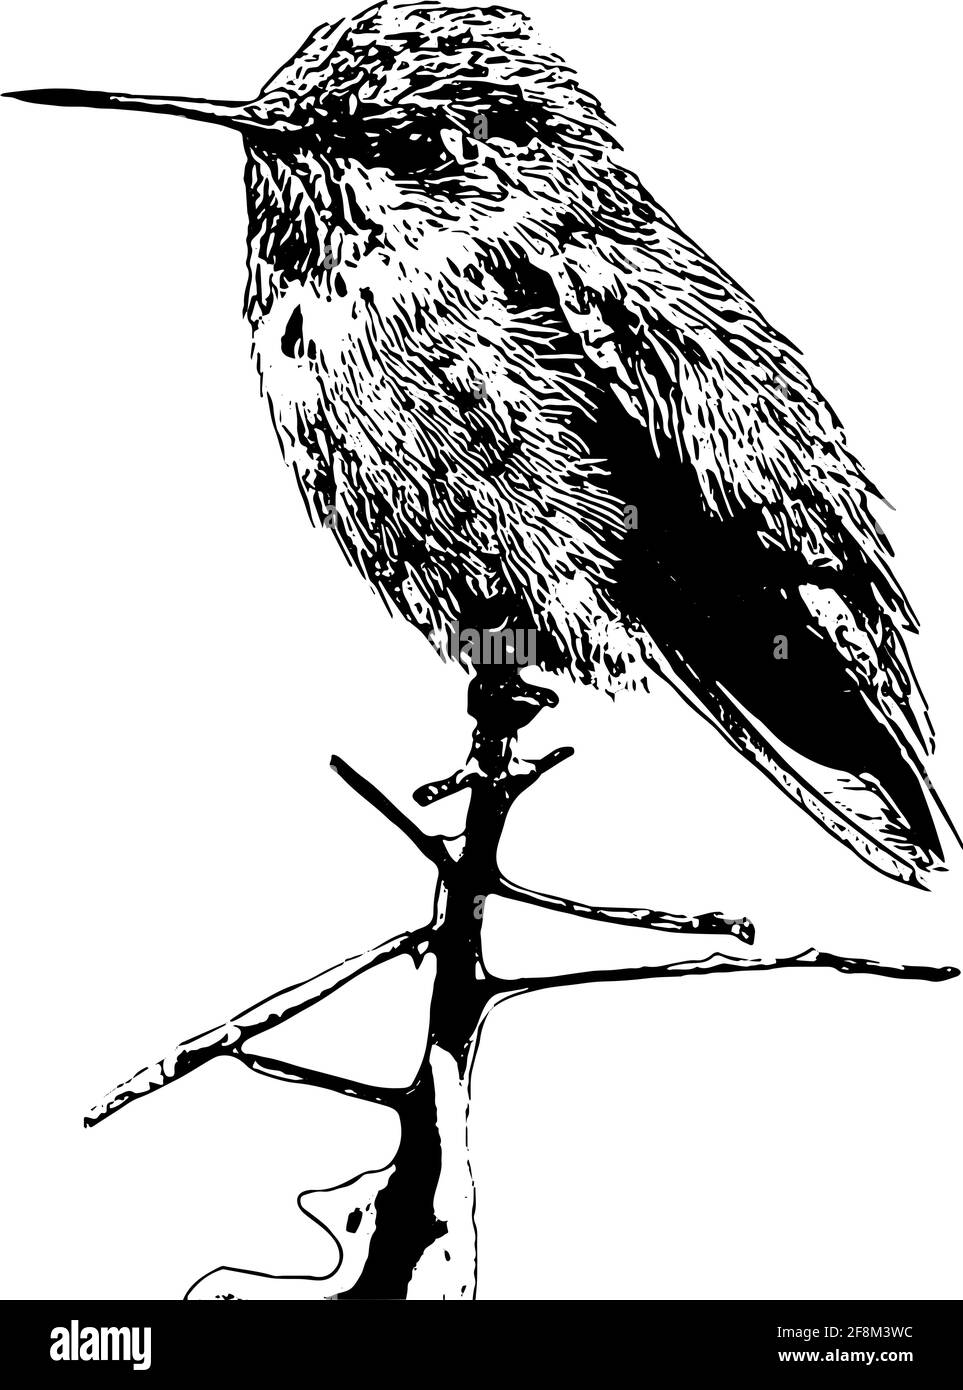 Kolibri auf einer Ast-Illustration Stock Vektor